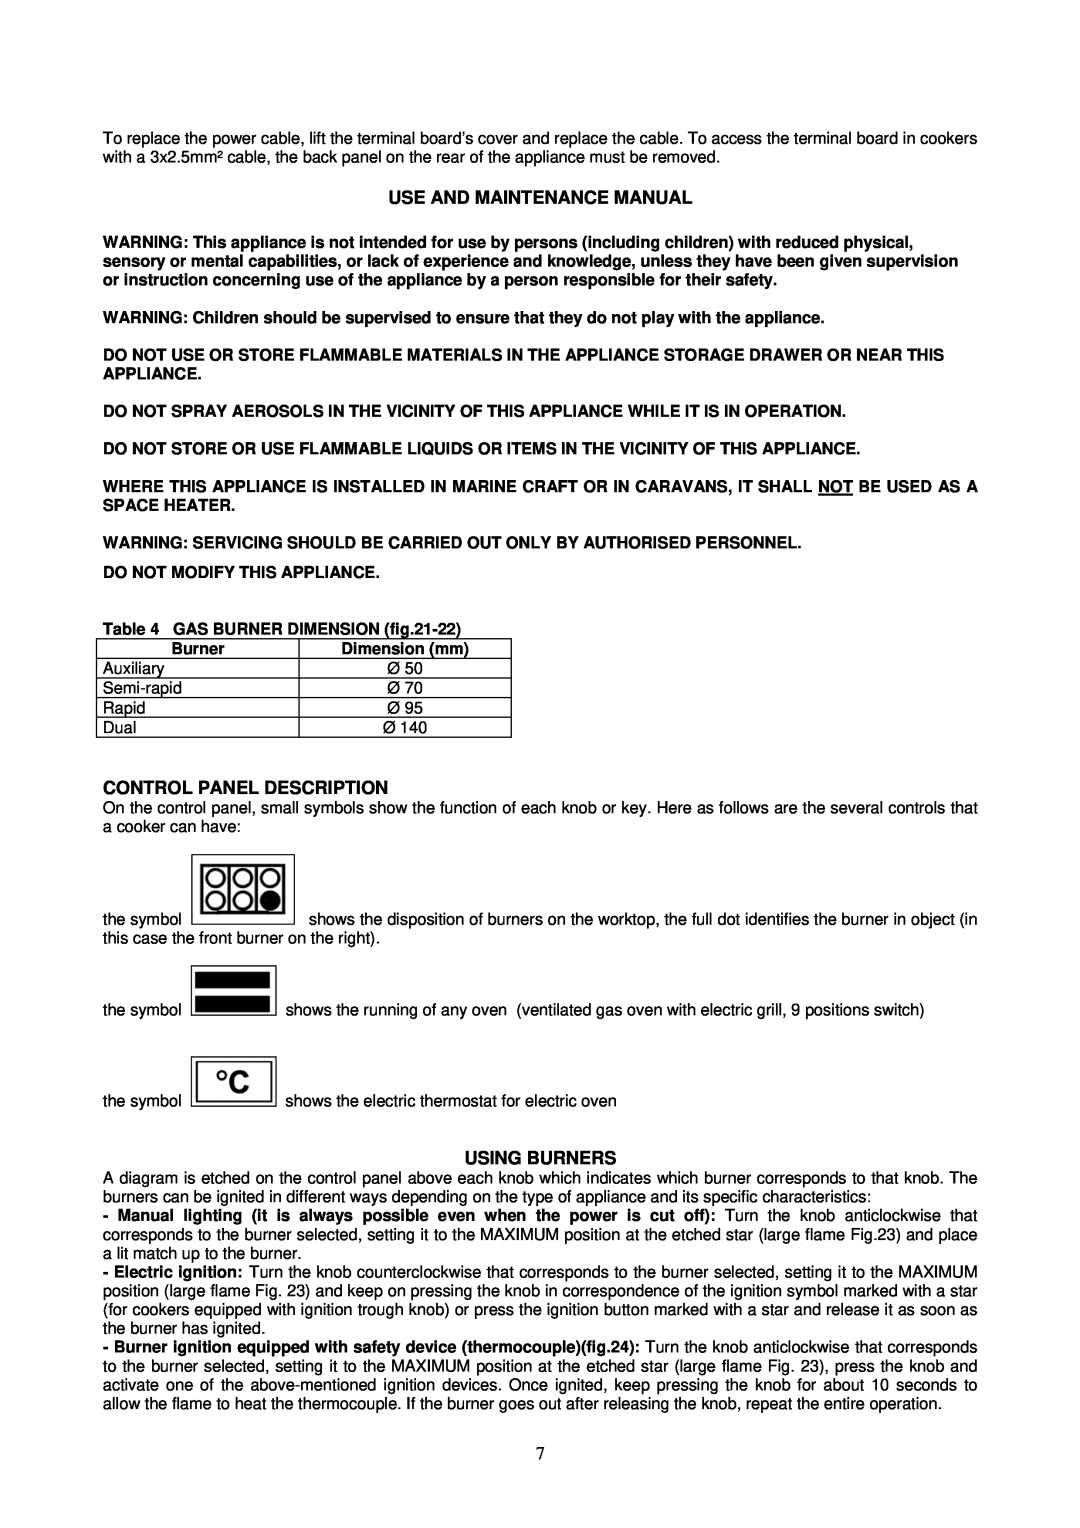 Bertazzoni X906MFE, X906GEV, X906 DUAL manual Use And Maintenance Manual, Control Panel Description, Using Burners 